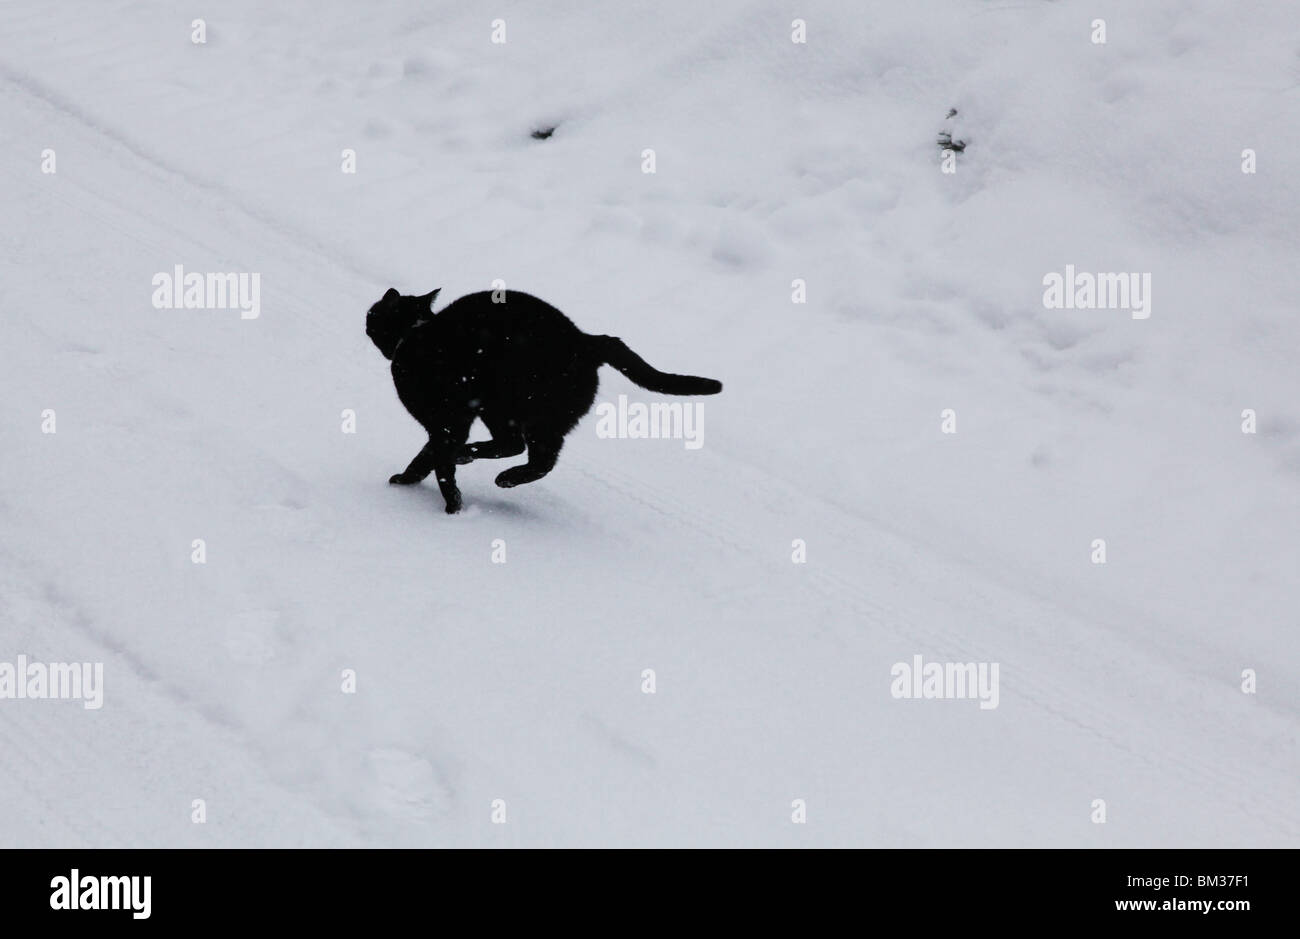 BLACK CAT SILHOUETTE RUNNING IN SNOW SYMBOLIC BAD LUCK: Black cat runs in snow Sweden winter silhouette Stock Photo